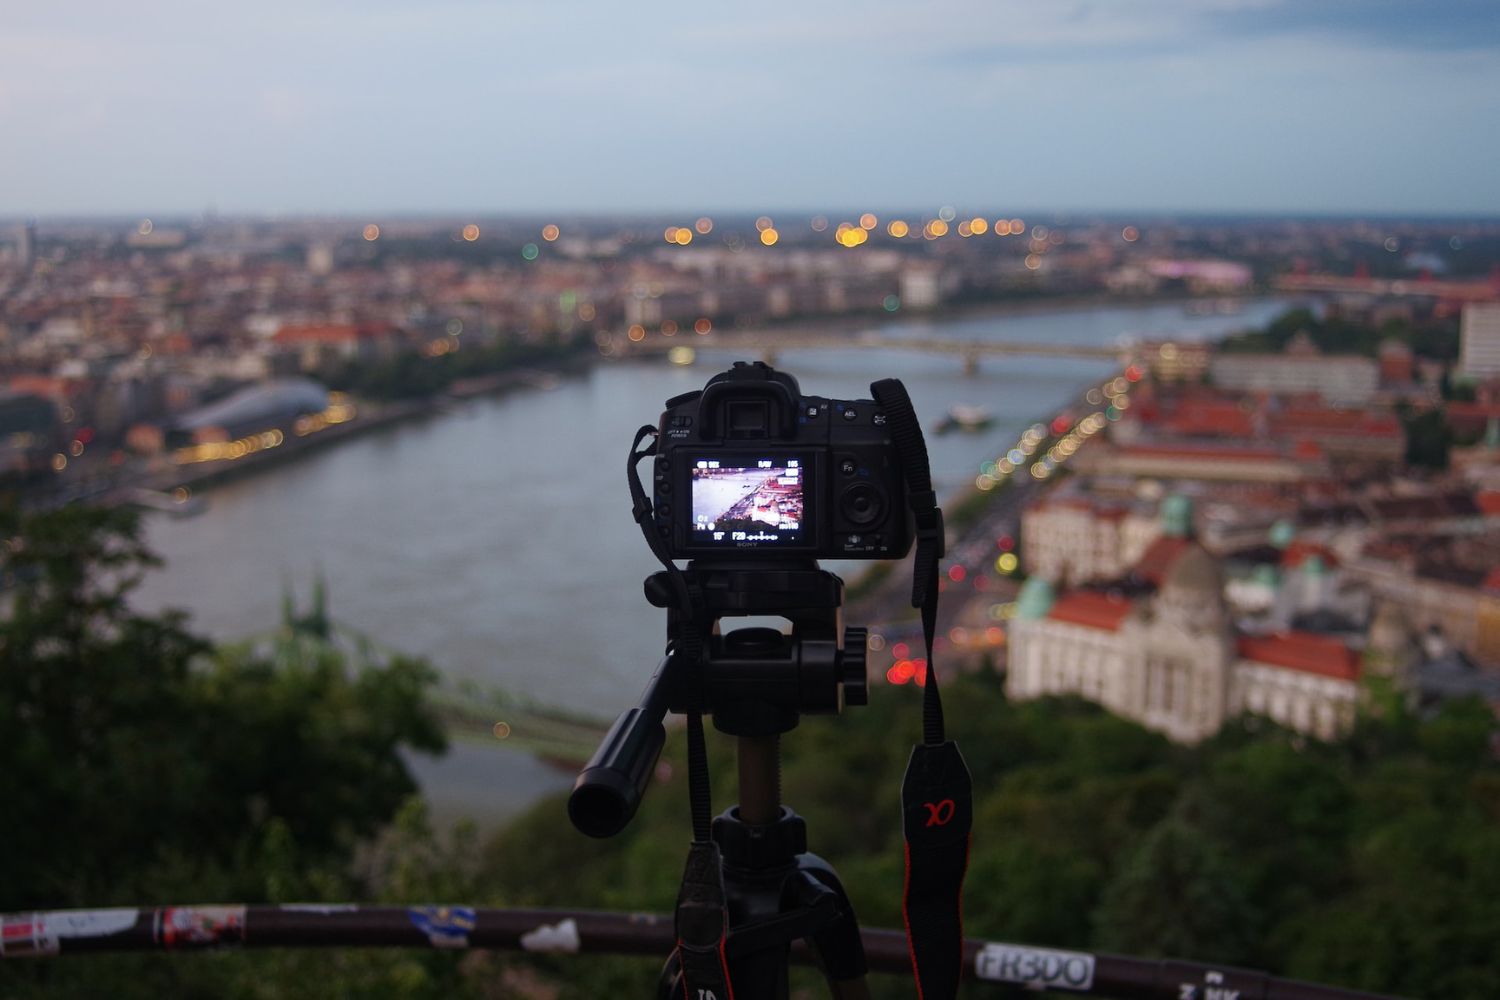 camera on tripod recording city Photo by Patrik Tuka on Unsplash